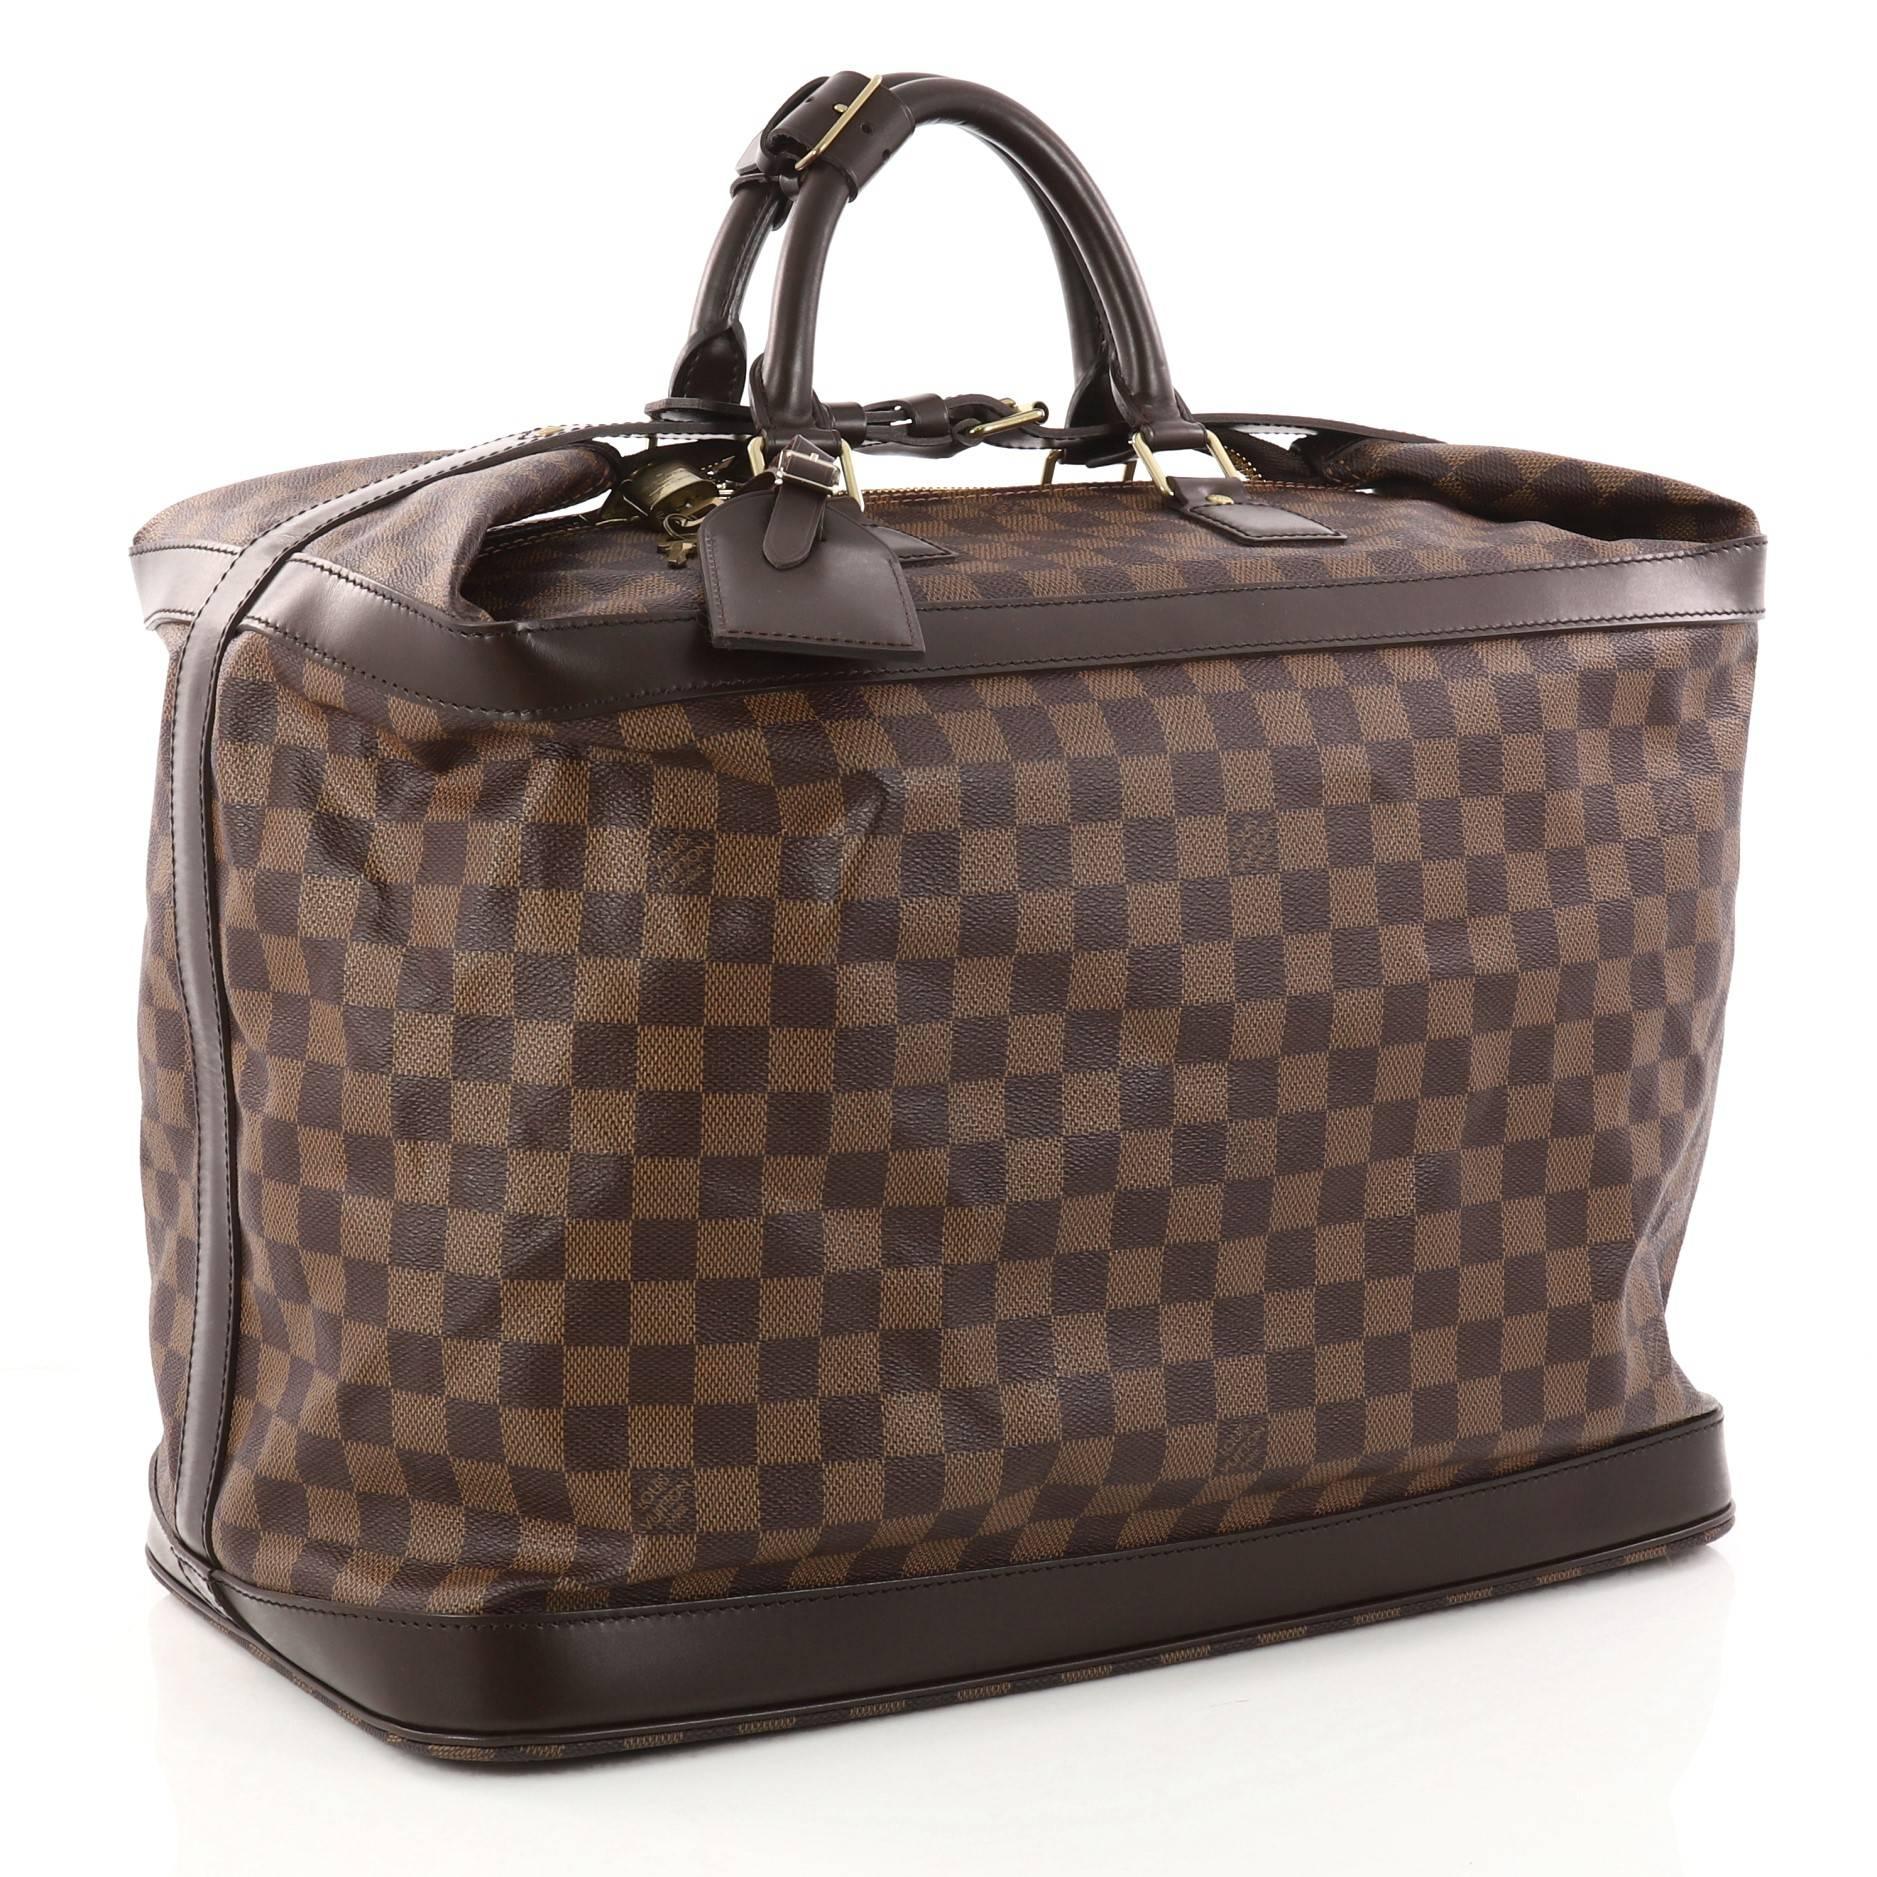 Black Louis Vuitton Cruiser Handbag Damier 45